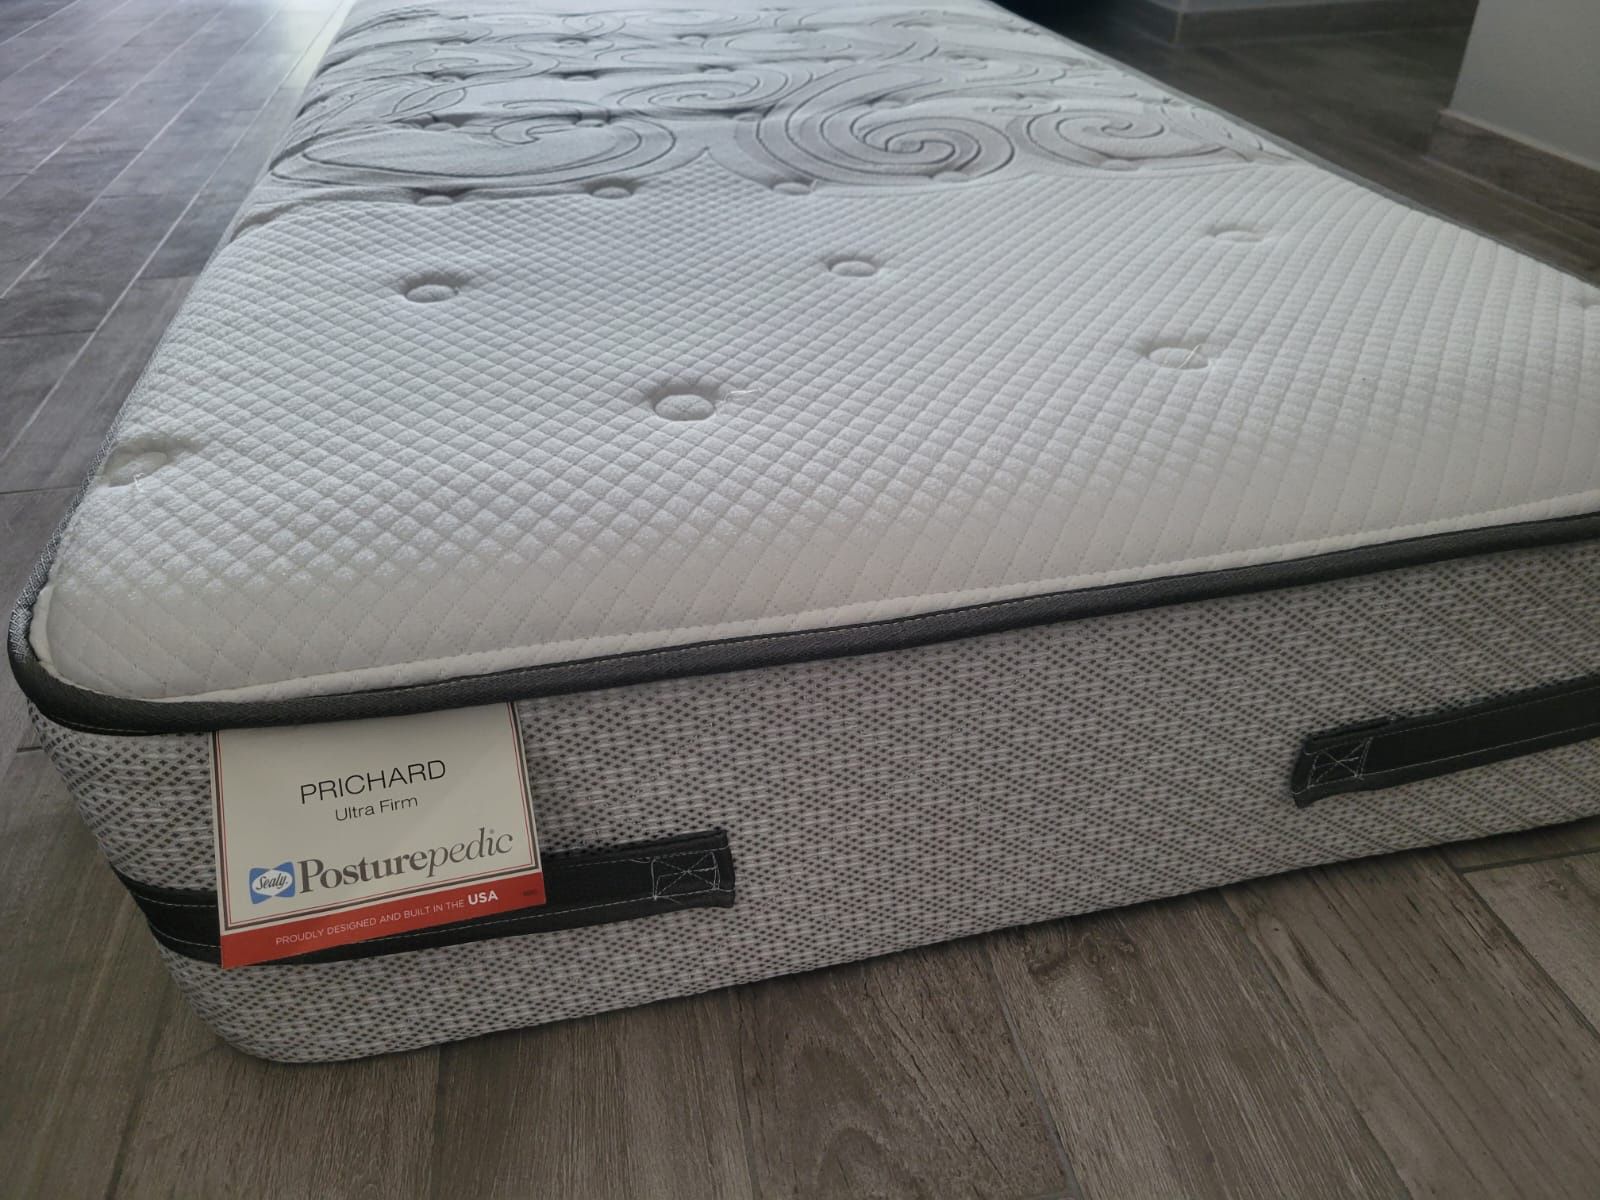 sealy prichard ultra firm mattress review